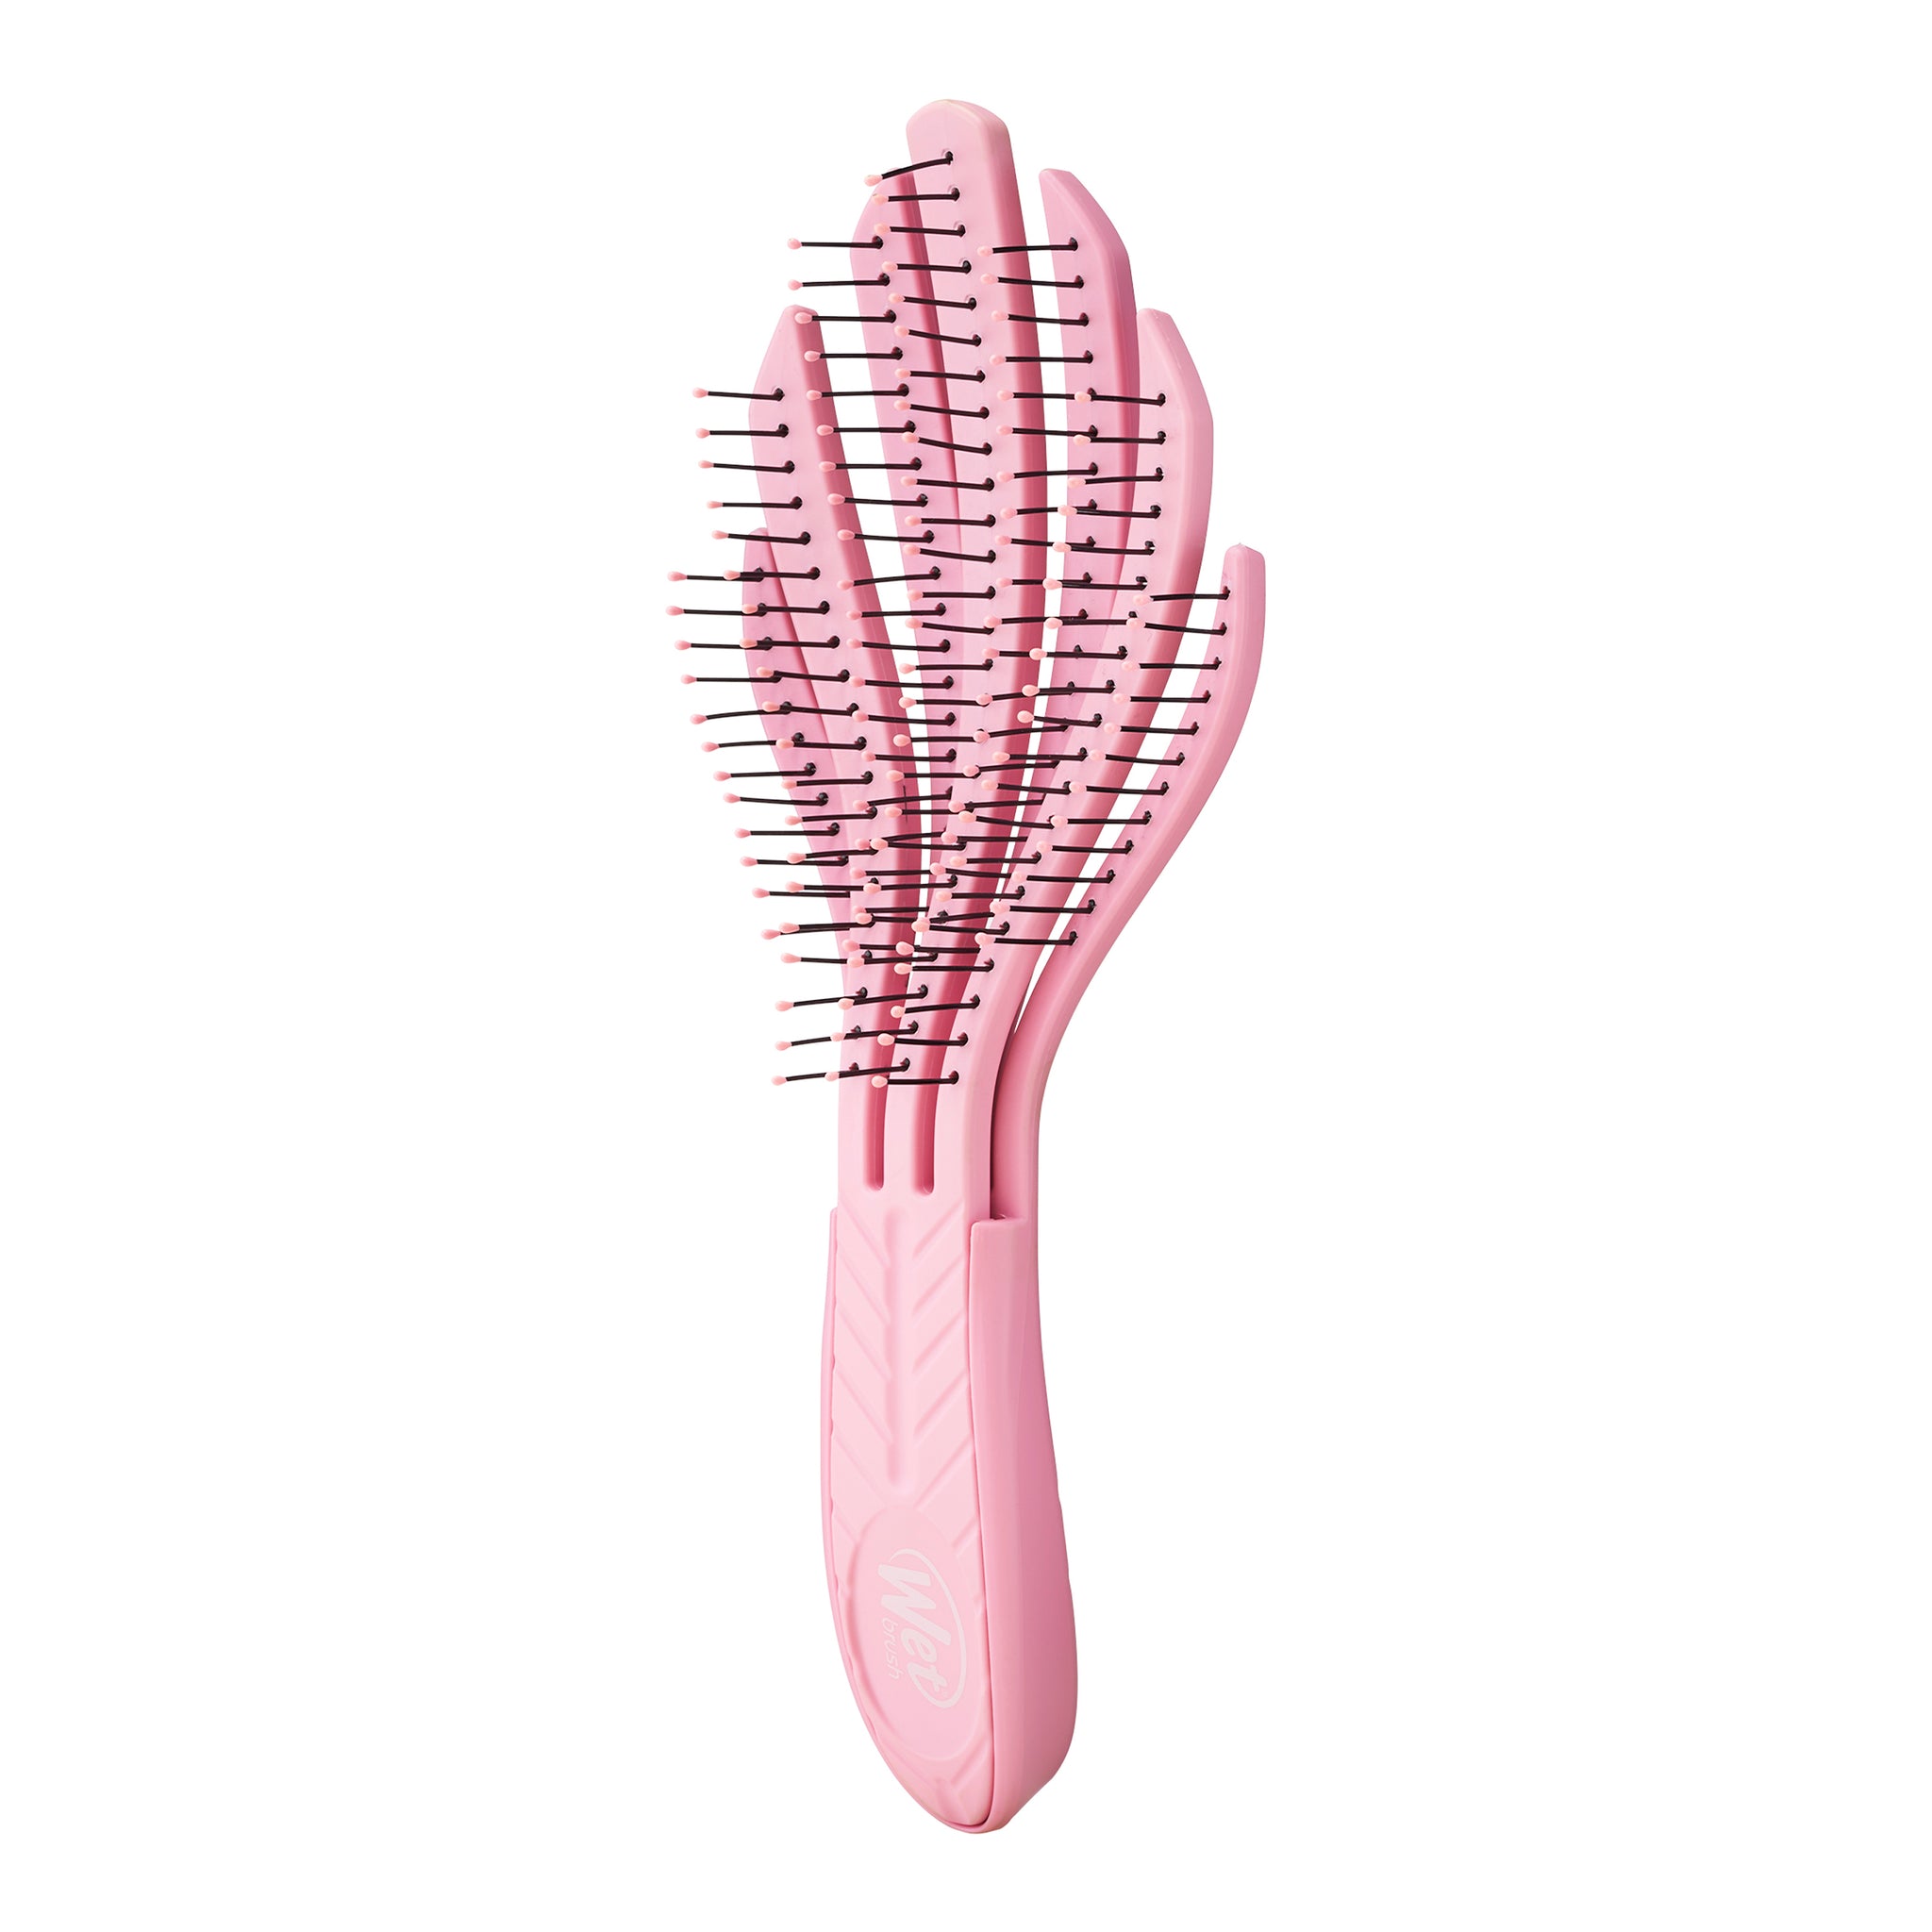 EZ Detangler Brush review: Does this brush for natural hair work? - Reviewed